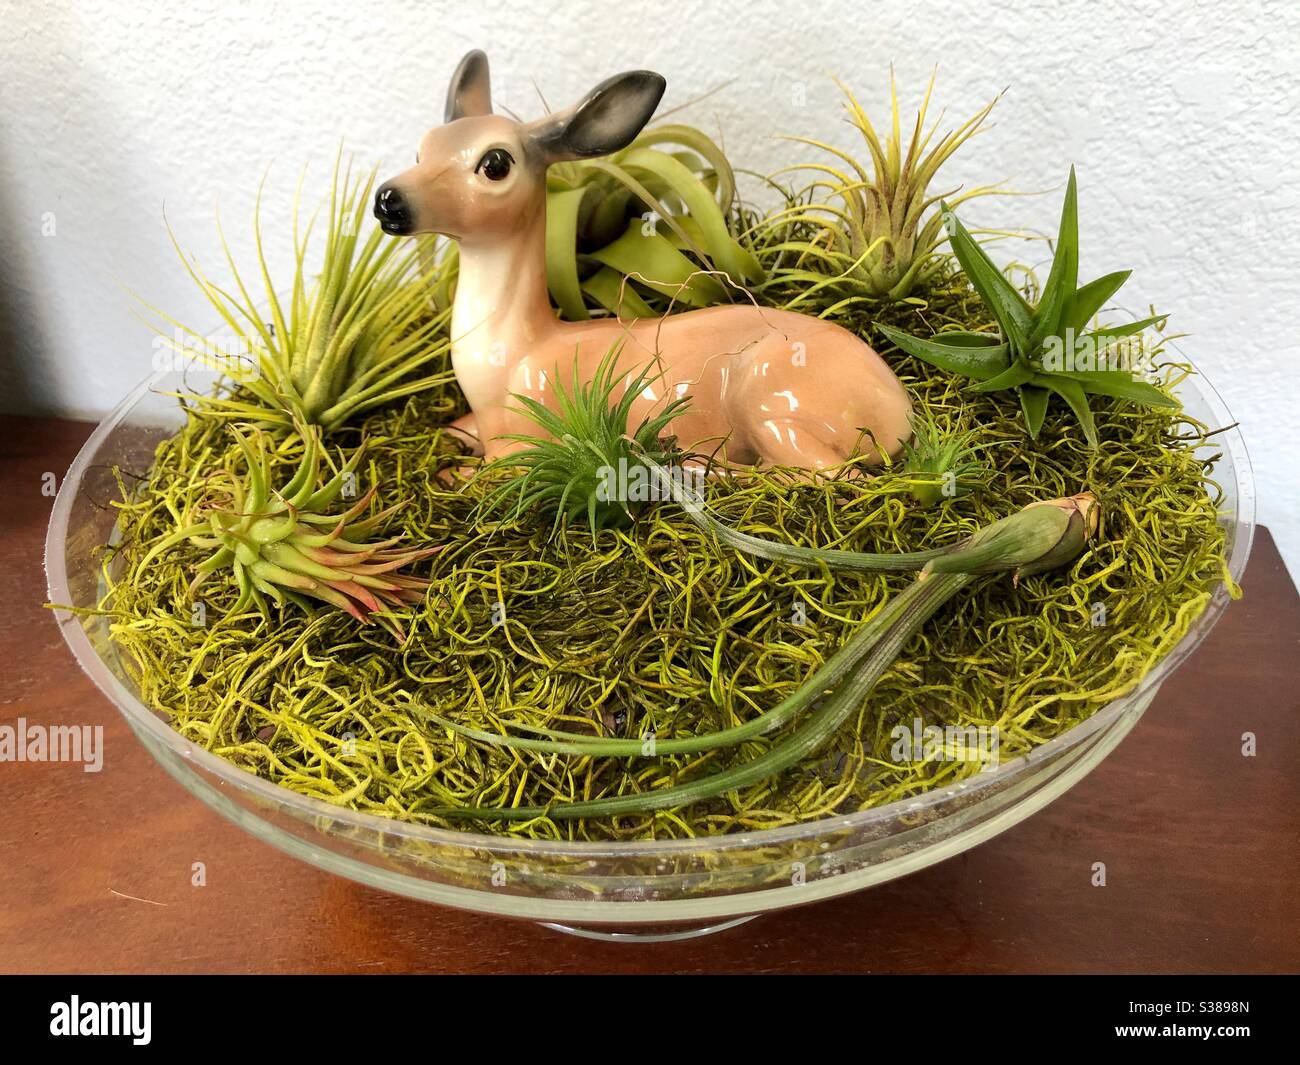 Planter arrangement with air plants and vintage deer figurine. Stock Photo